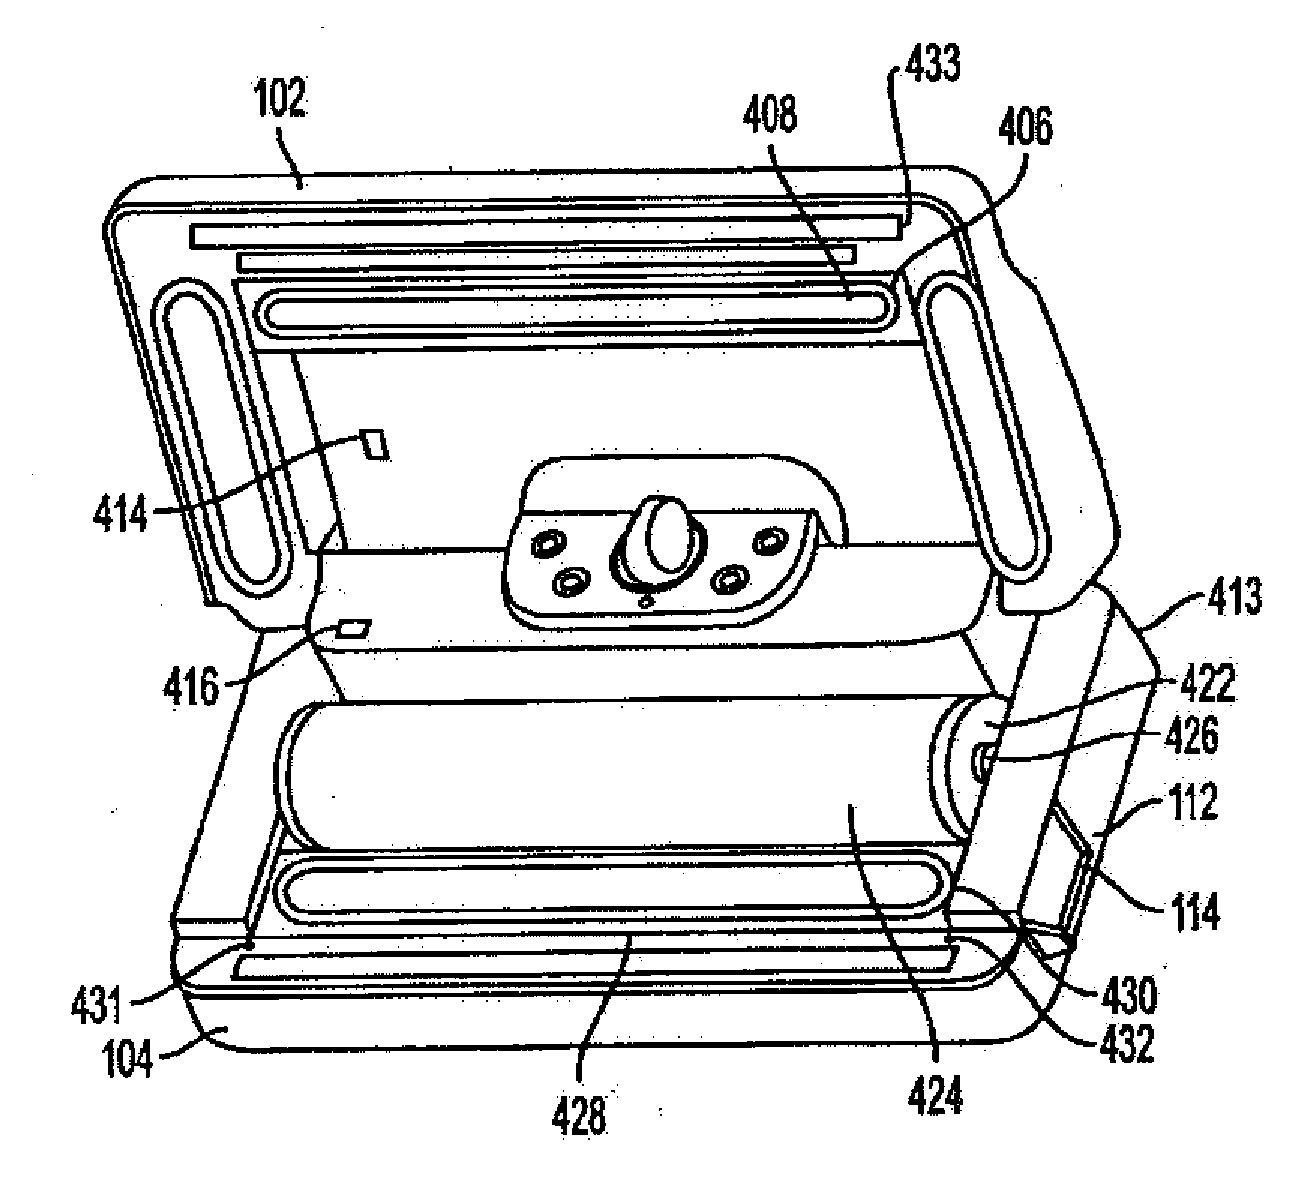 Heat sealer with algorithm for regulating sealing temperature